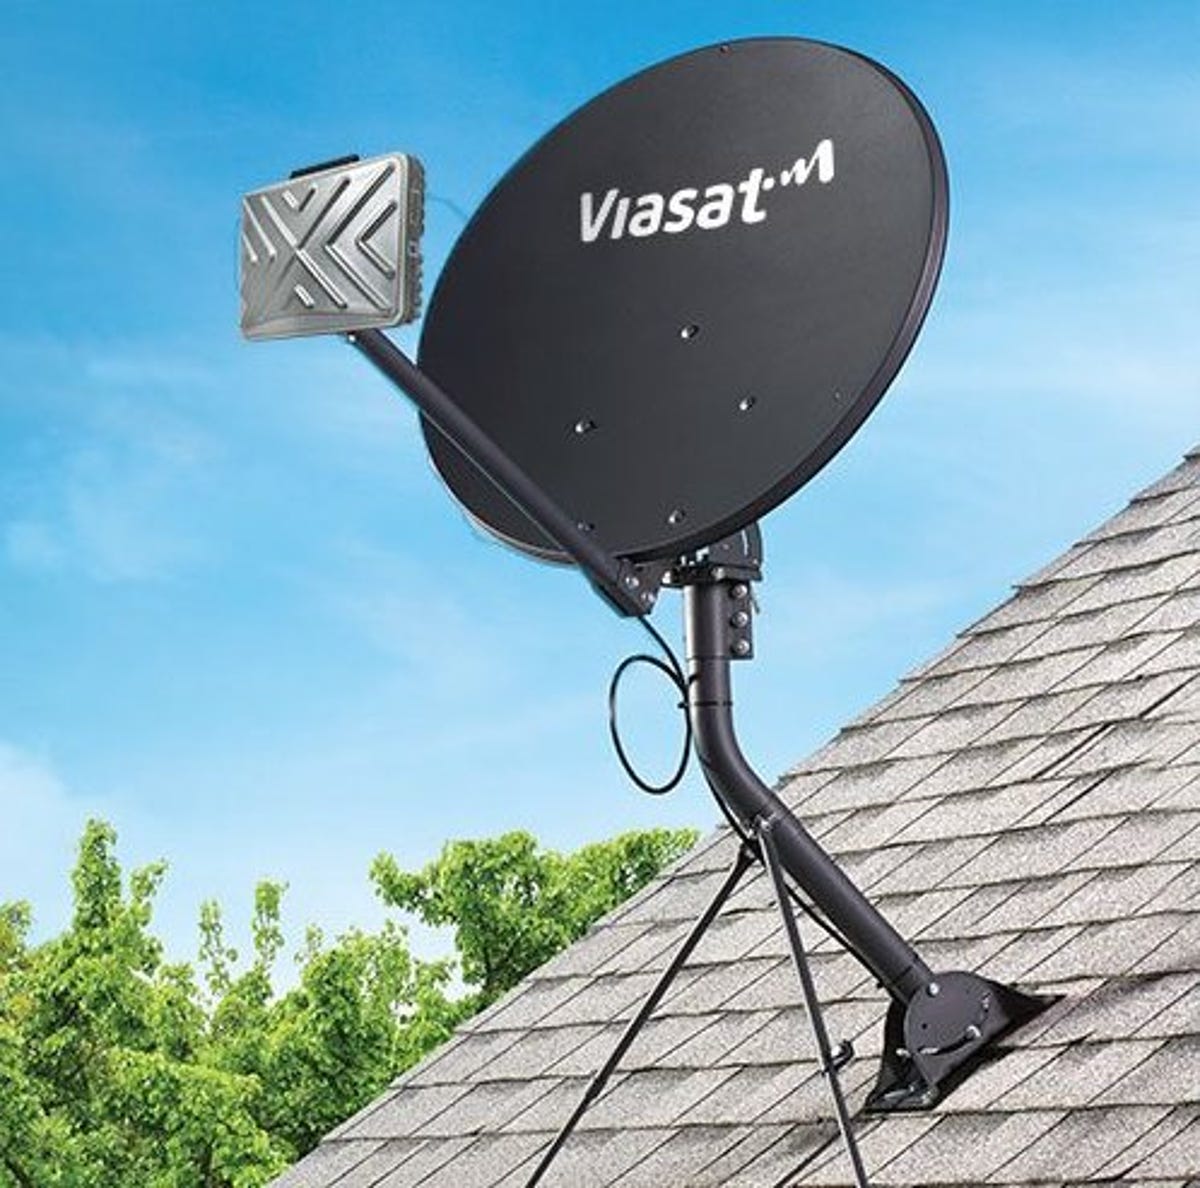 Satellite dish with the Viasat logo on it